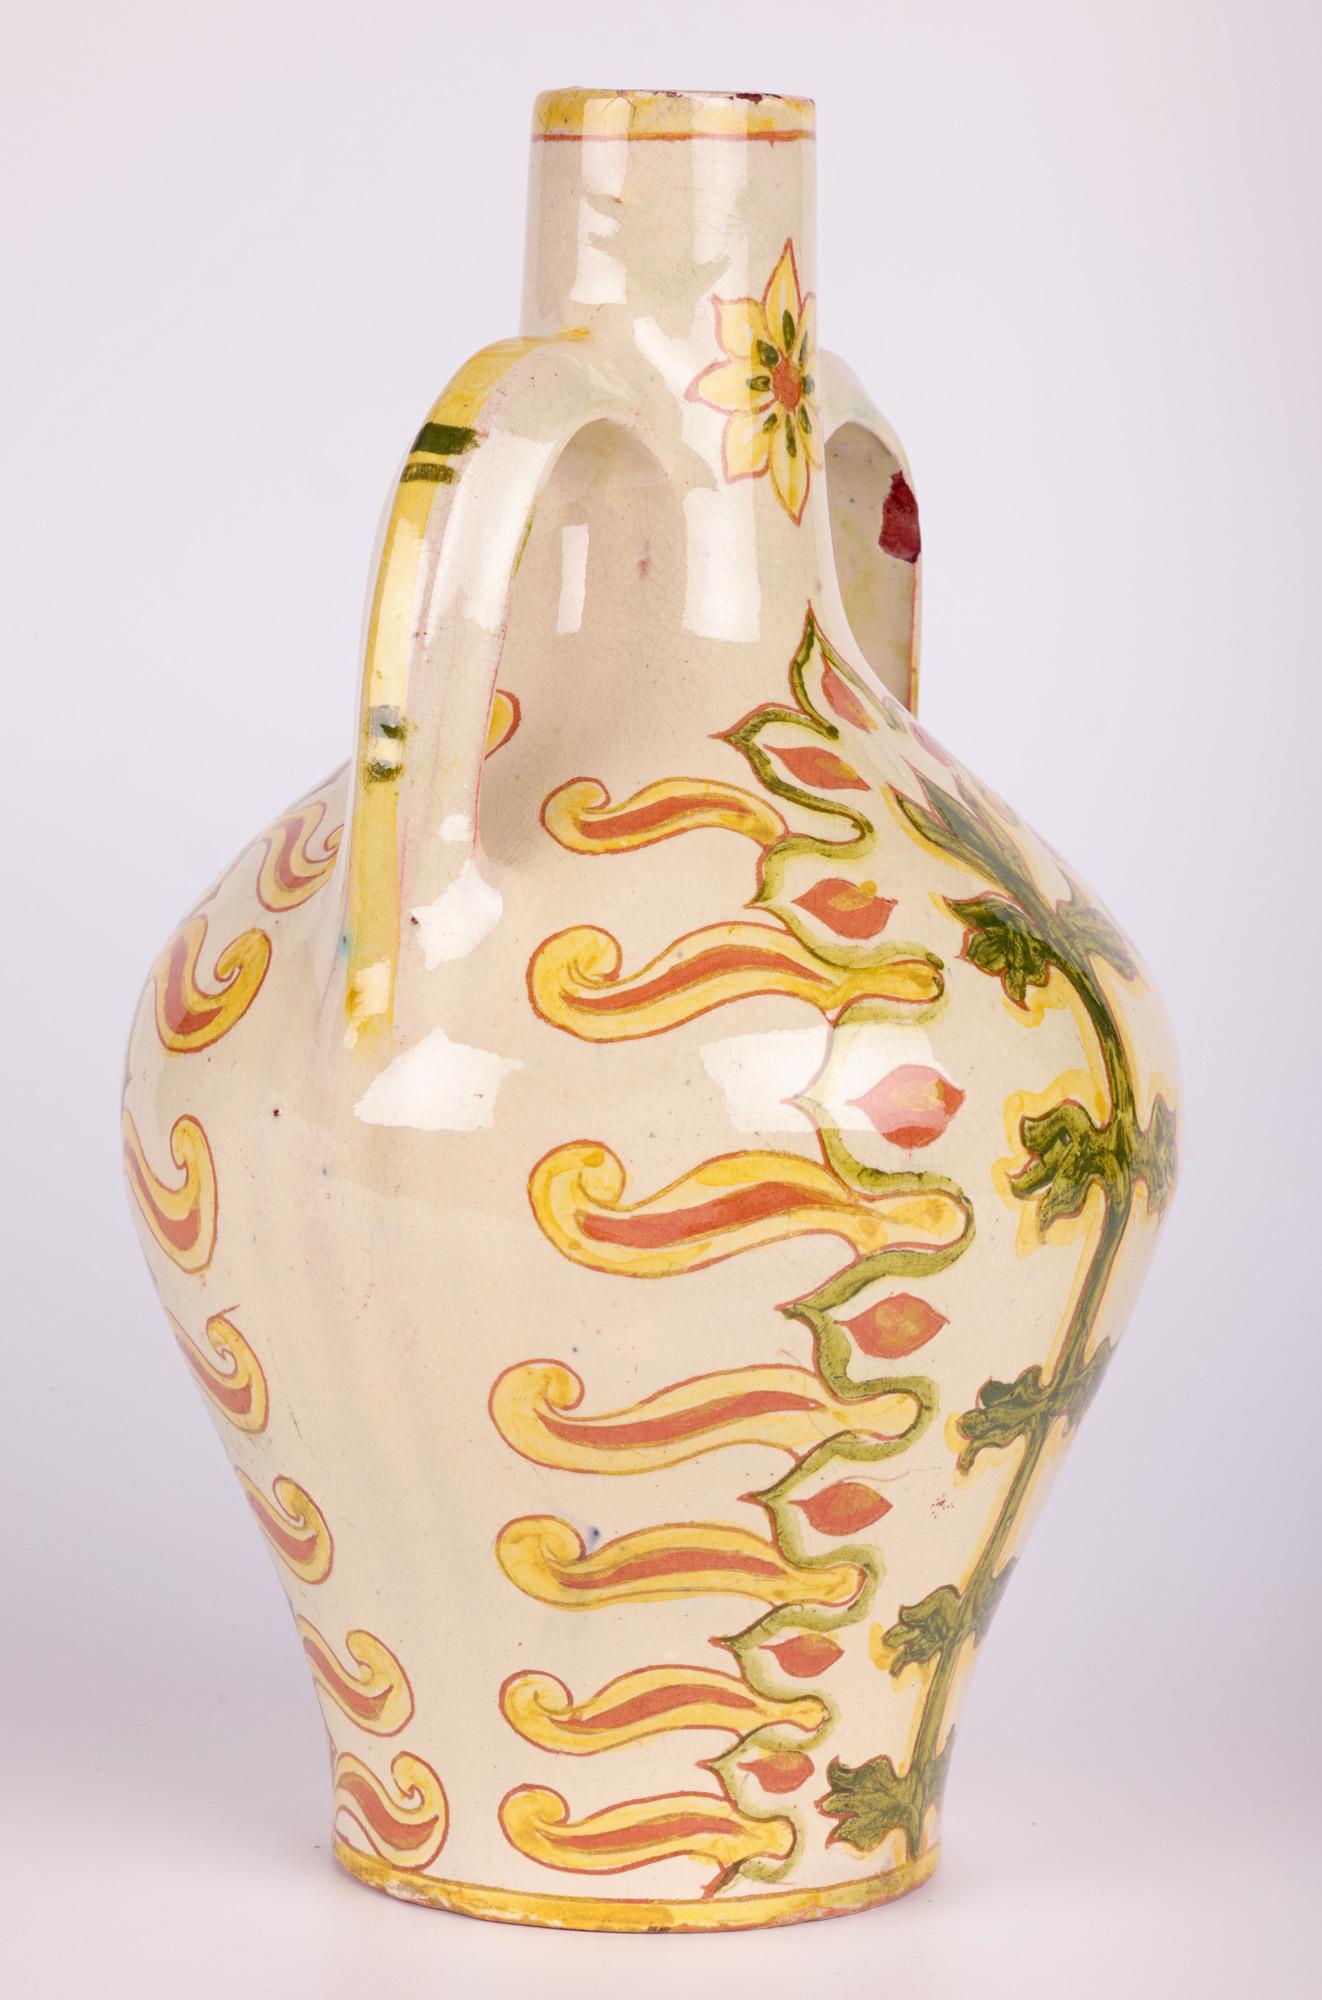 Lizzie Wilkins Della Robbia Birkenhead Arts & Crafts Vase For Sale 7